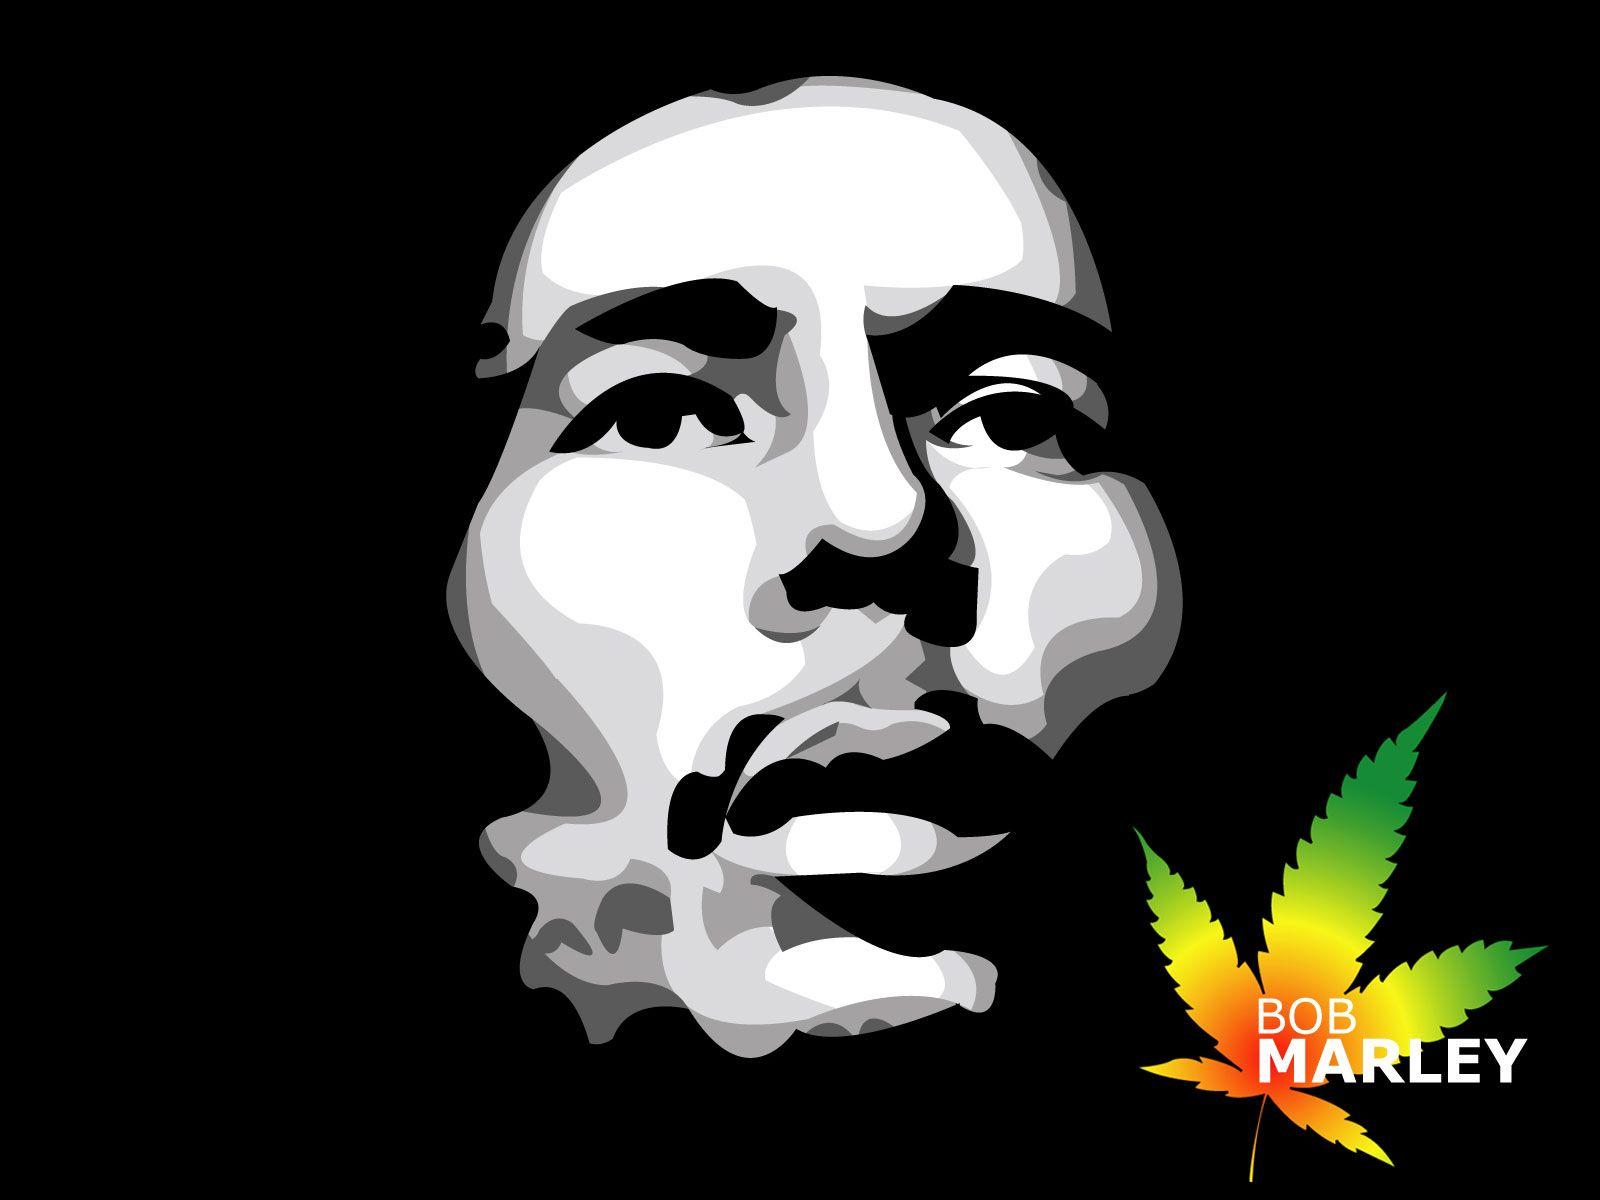 Bob Marley Colors Wallpaper HD. AnythingNokias.Com News